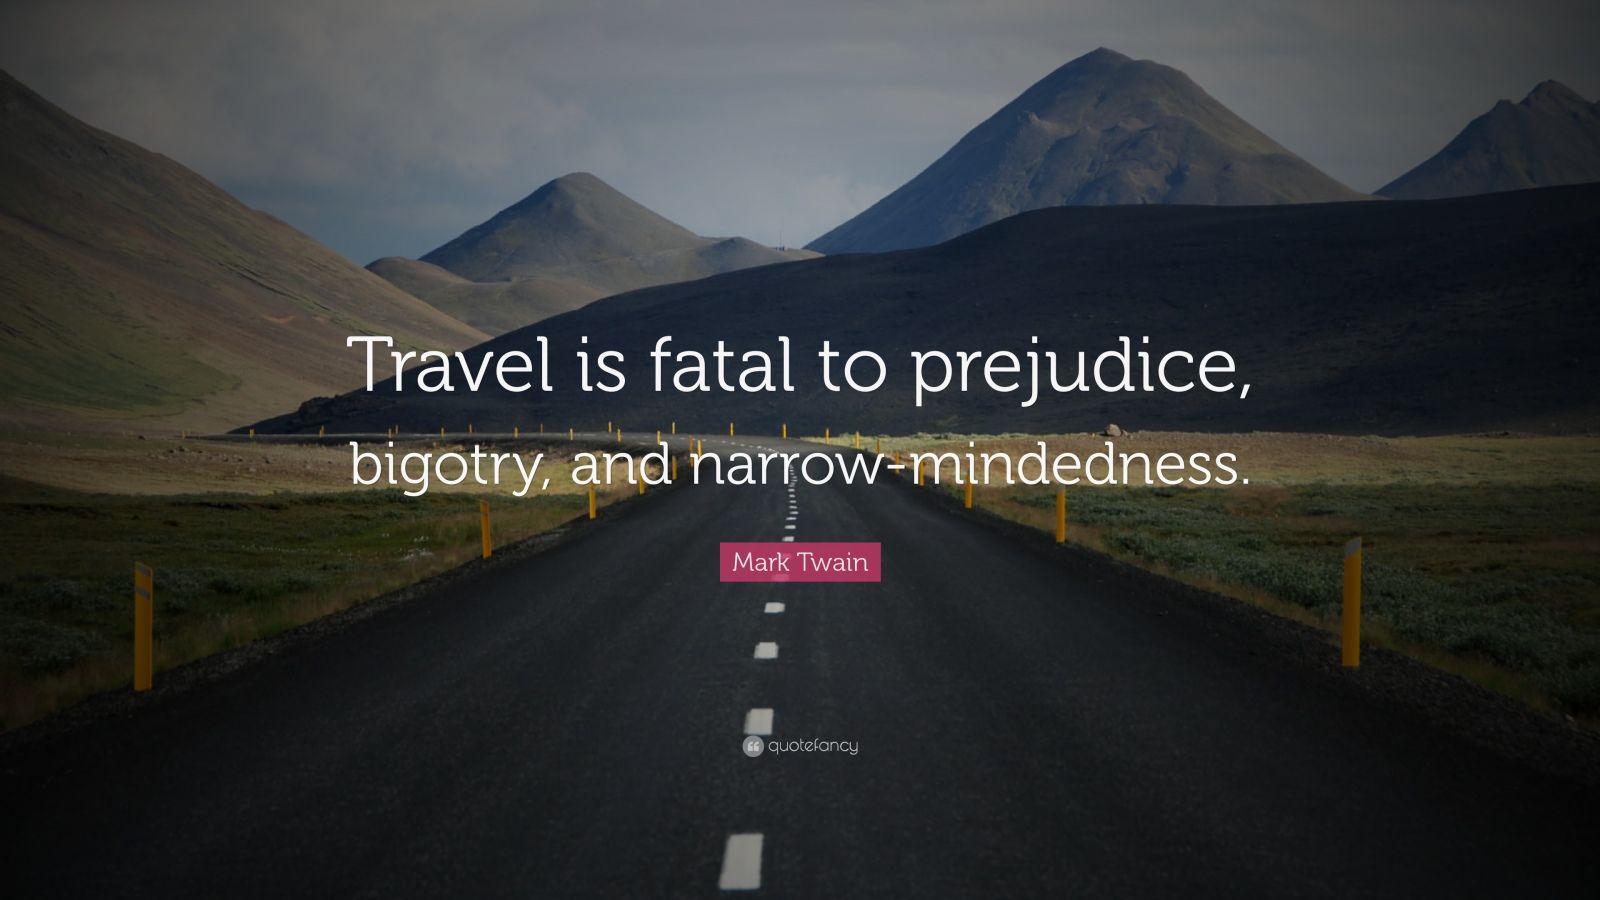 Mark Twain Quote: “Travel is fatal to prejudice, bigotry ...